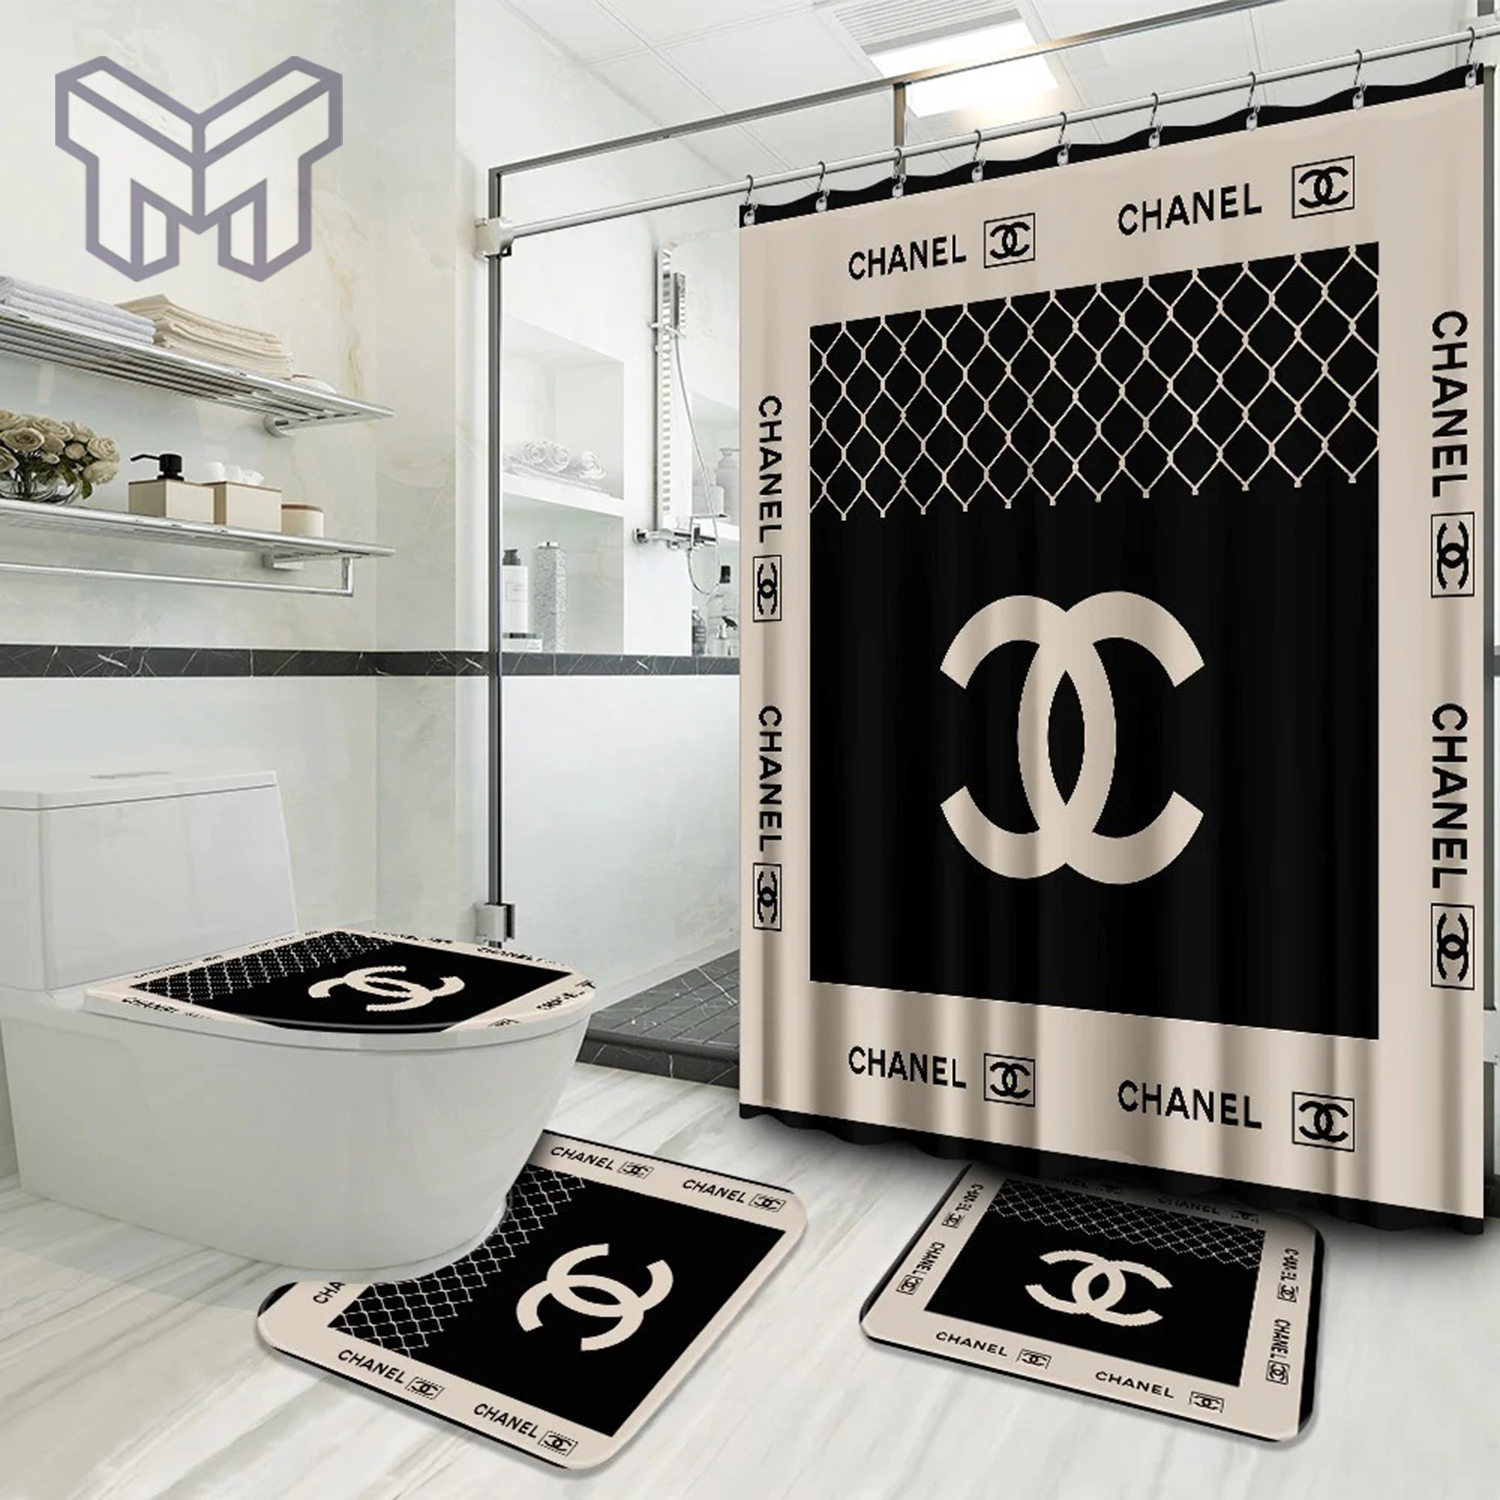 Gucci Golden Logo Premium Fashion Luxury Brand Bathroom Set Home Decor  Shower Curtain And Rug Toilet Seat Lid Covers Bathroom Set - Muranotex Store